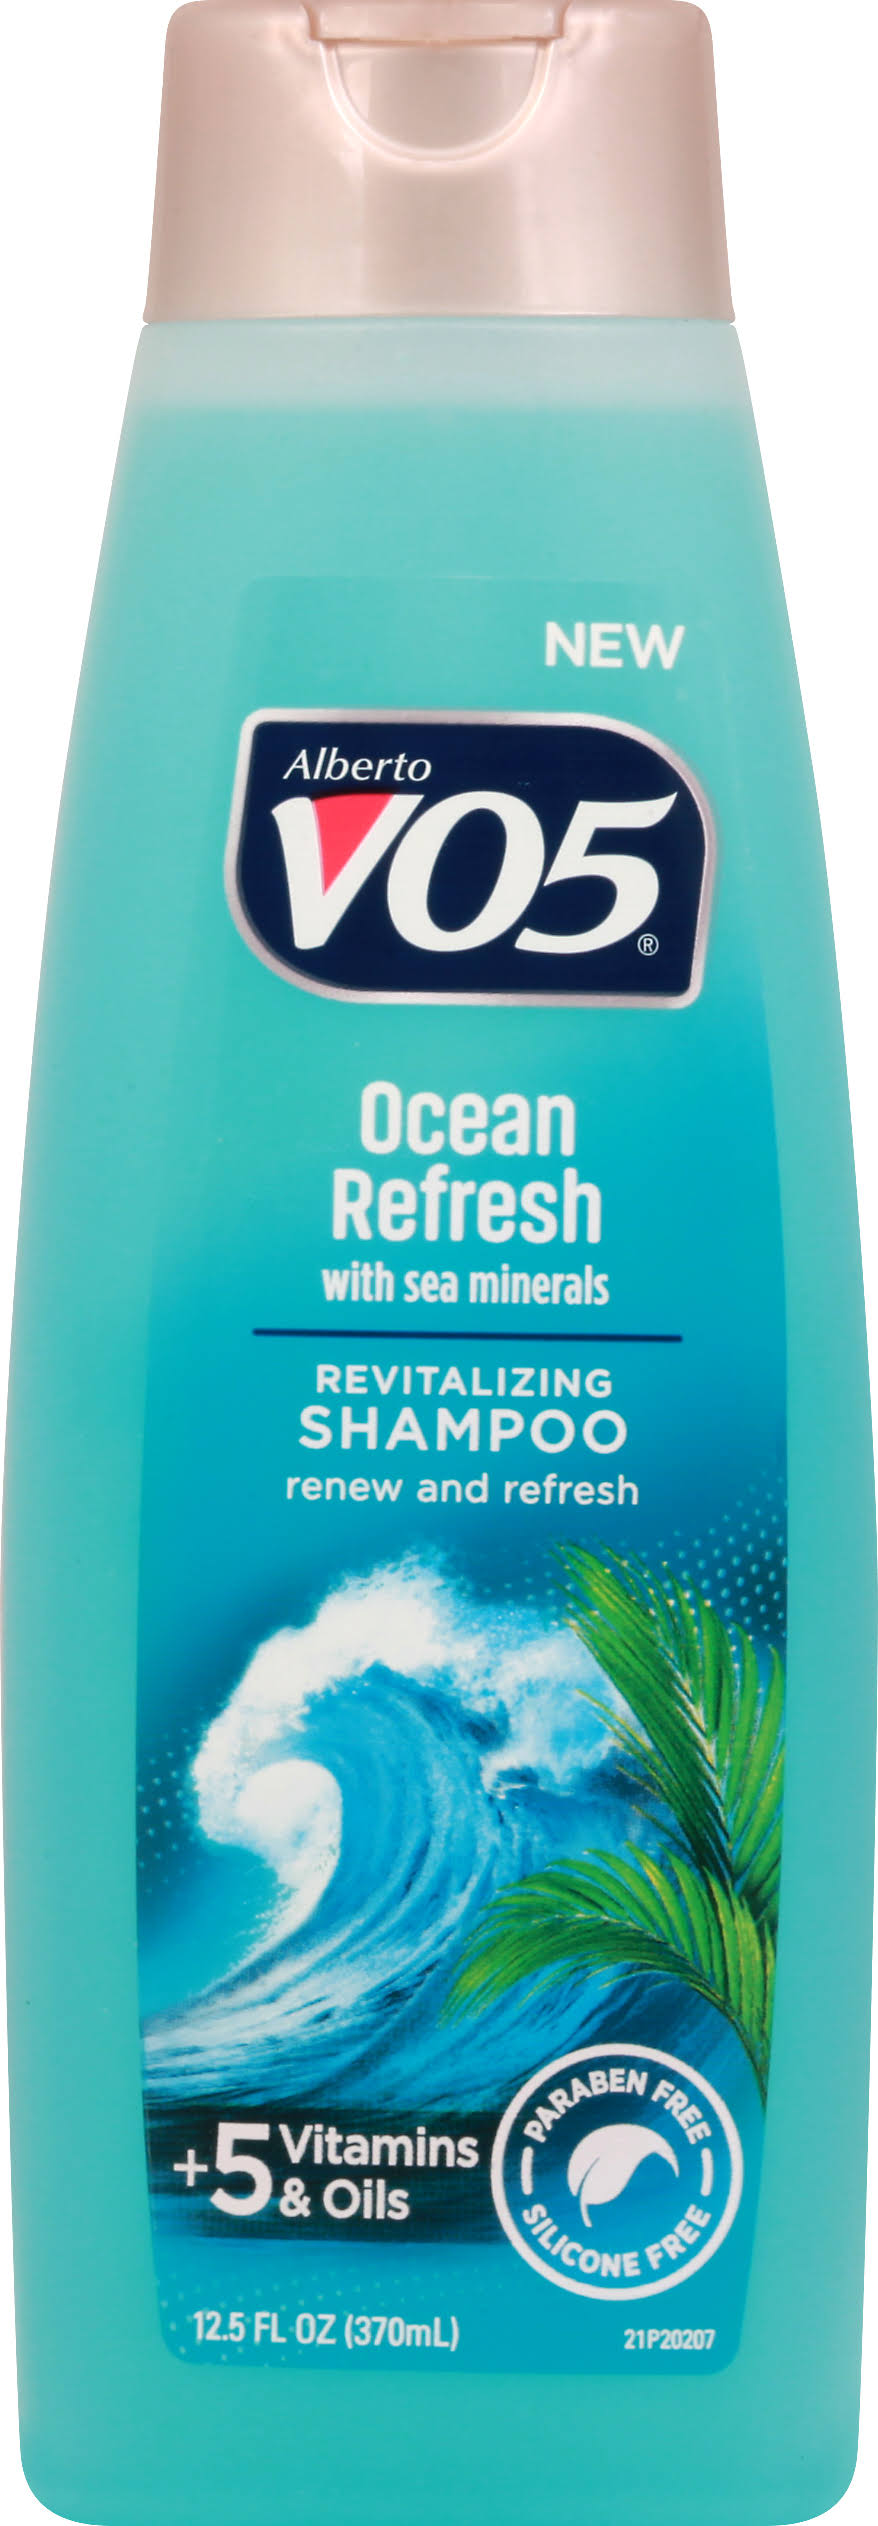 Alberto Vo5 Herbal Escapes Moisturizing Shampoo - Ocean Refresh, 370ml